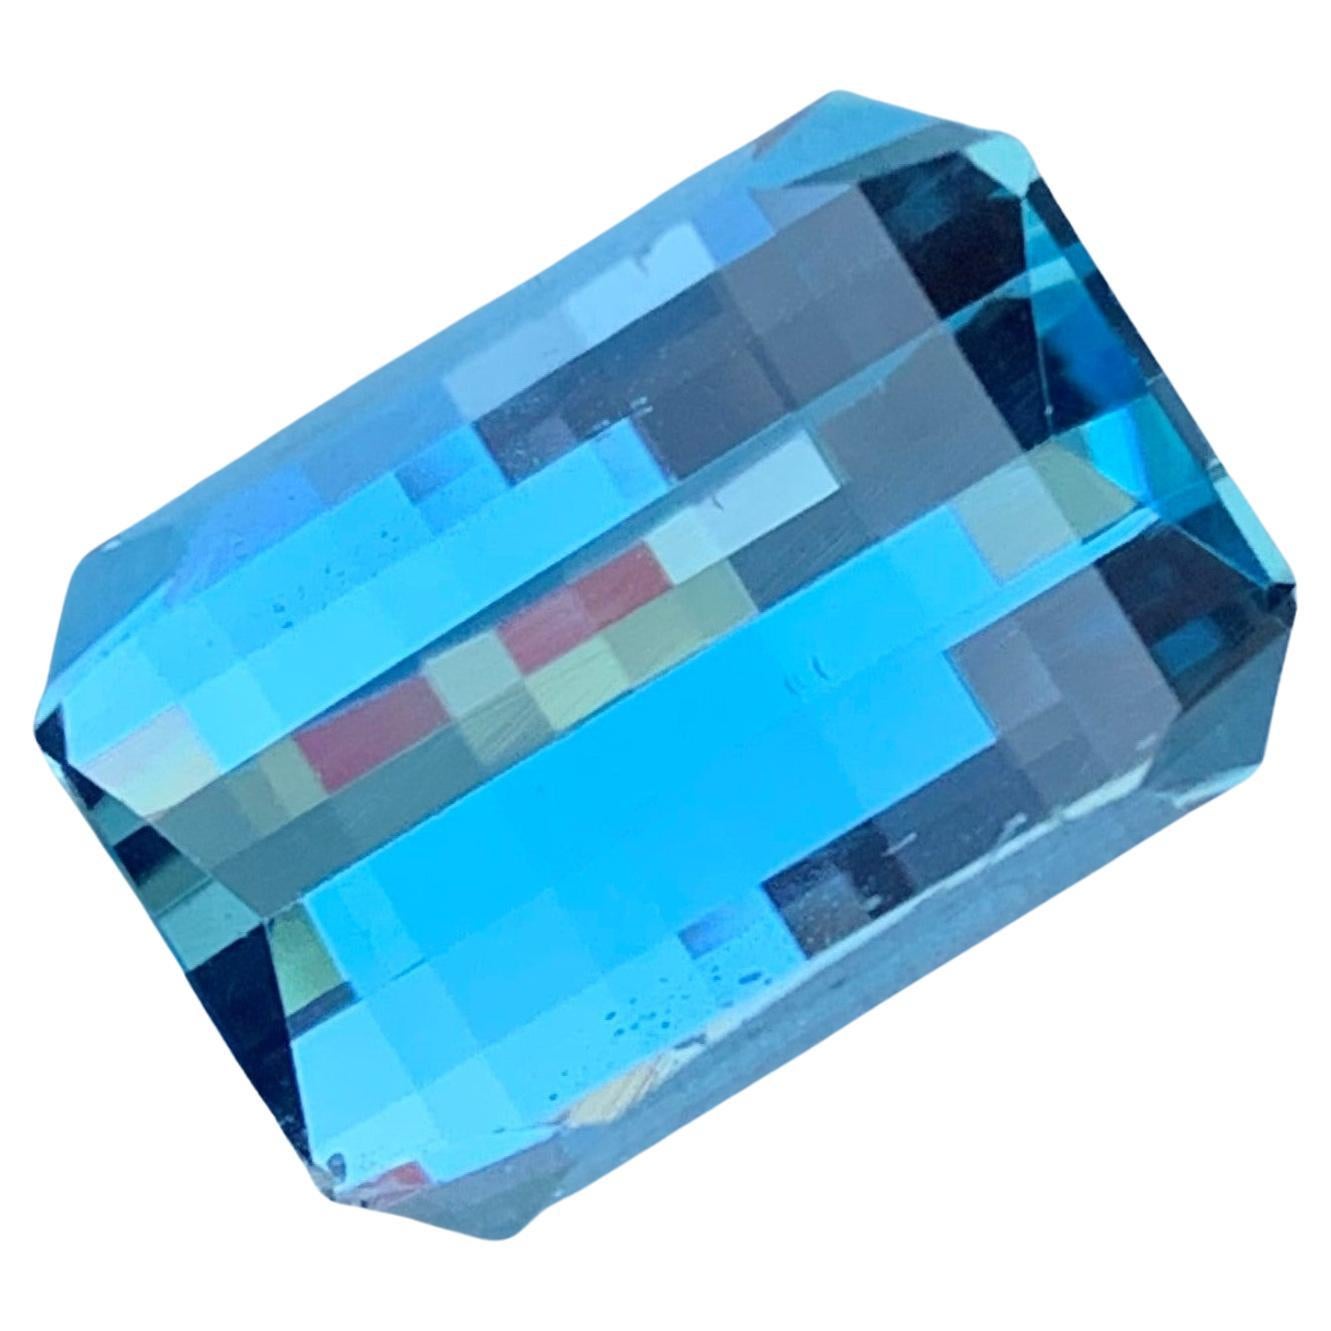 10.45 Carat Gorgeous Pixel Bar Cut Loose Sky Blue Topaz From Brazil For Sale